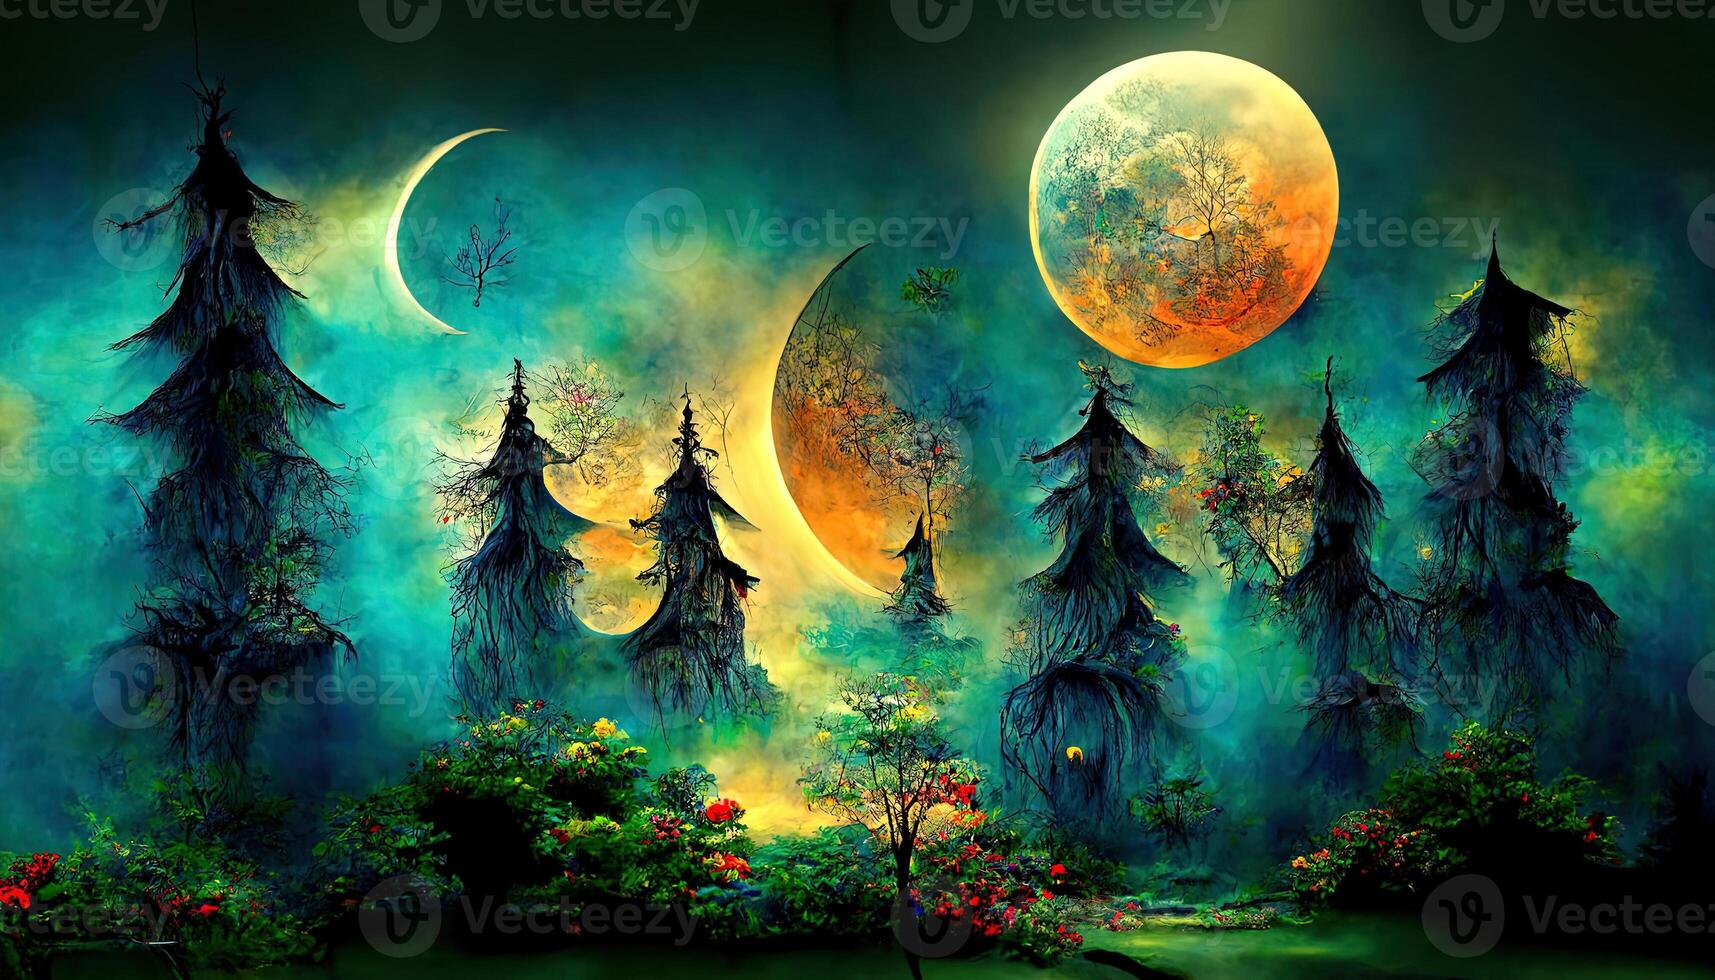 Full moon Wallpaper 4K, Forest, Night, Dark, Starry sky